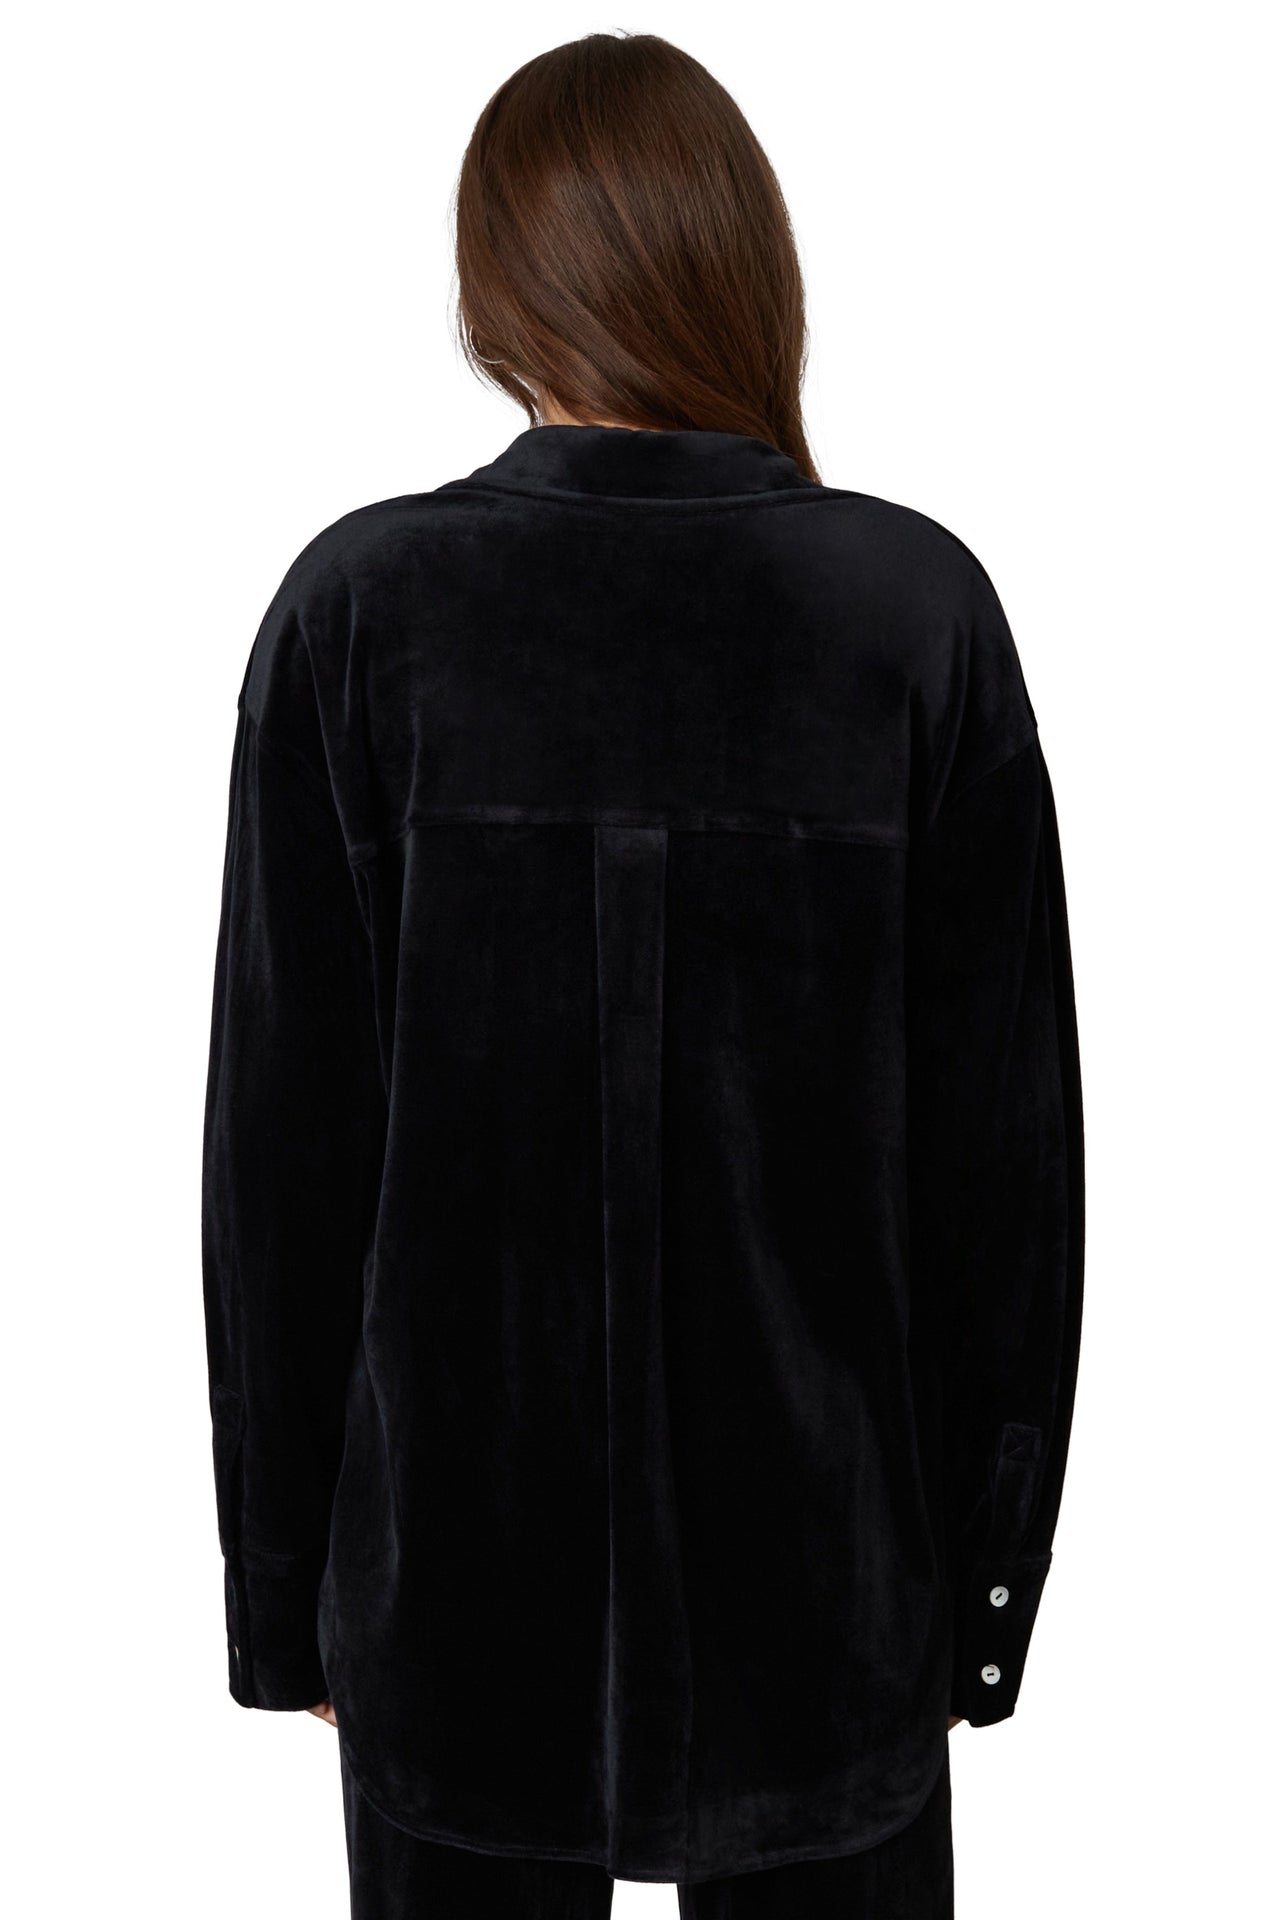 Velour Button Down Shirt Black, Tops Blouses by NIA | LIT Boutique